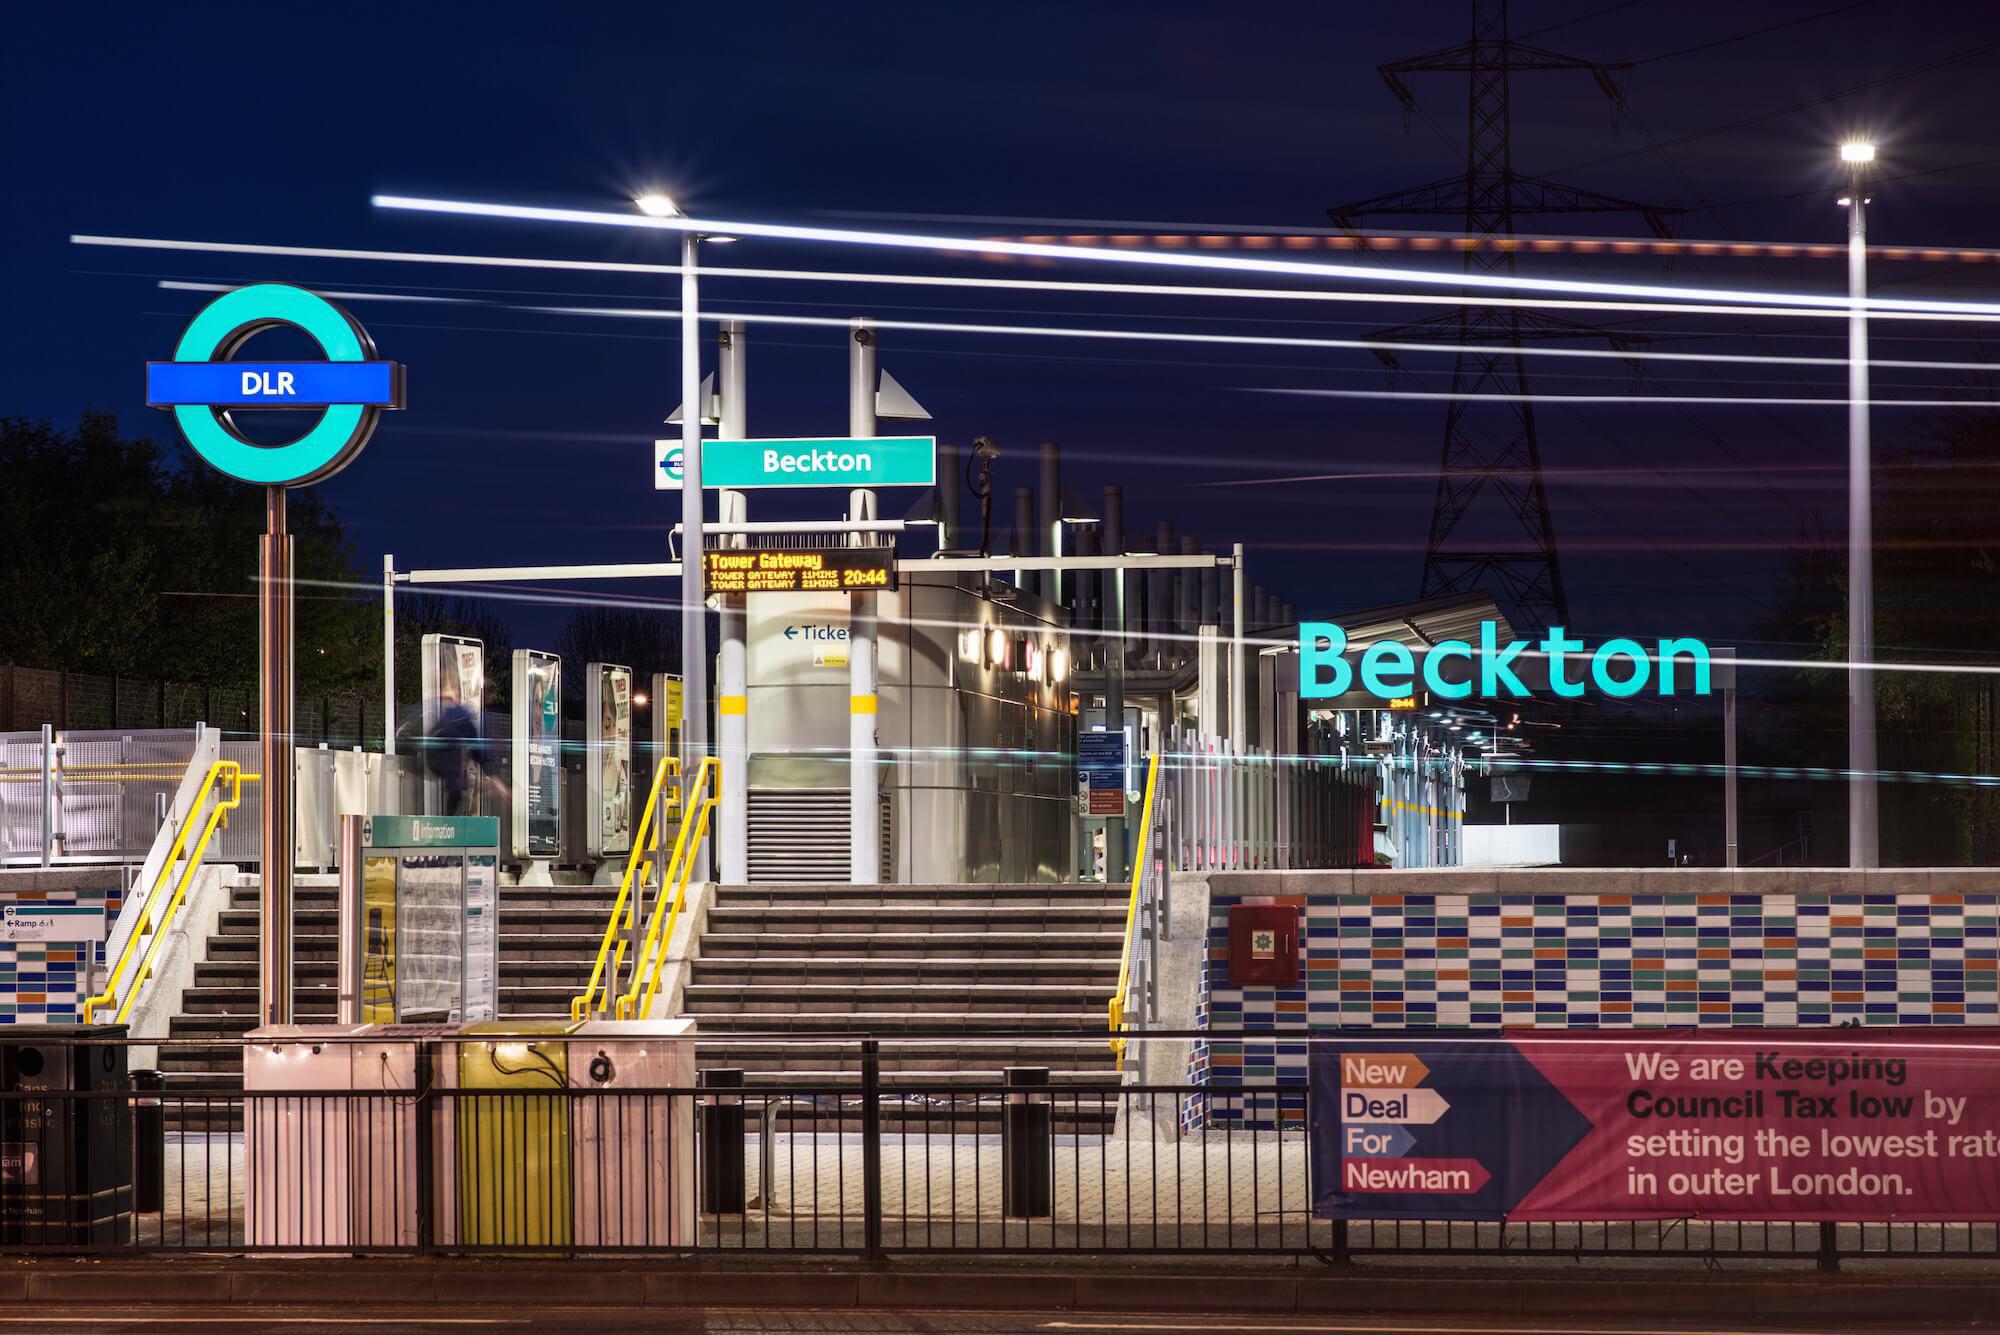 Beckton Station